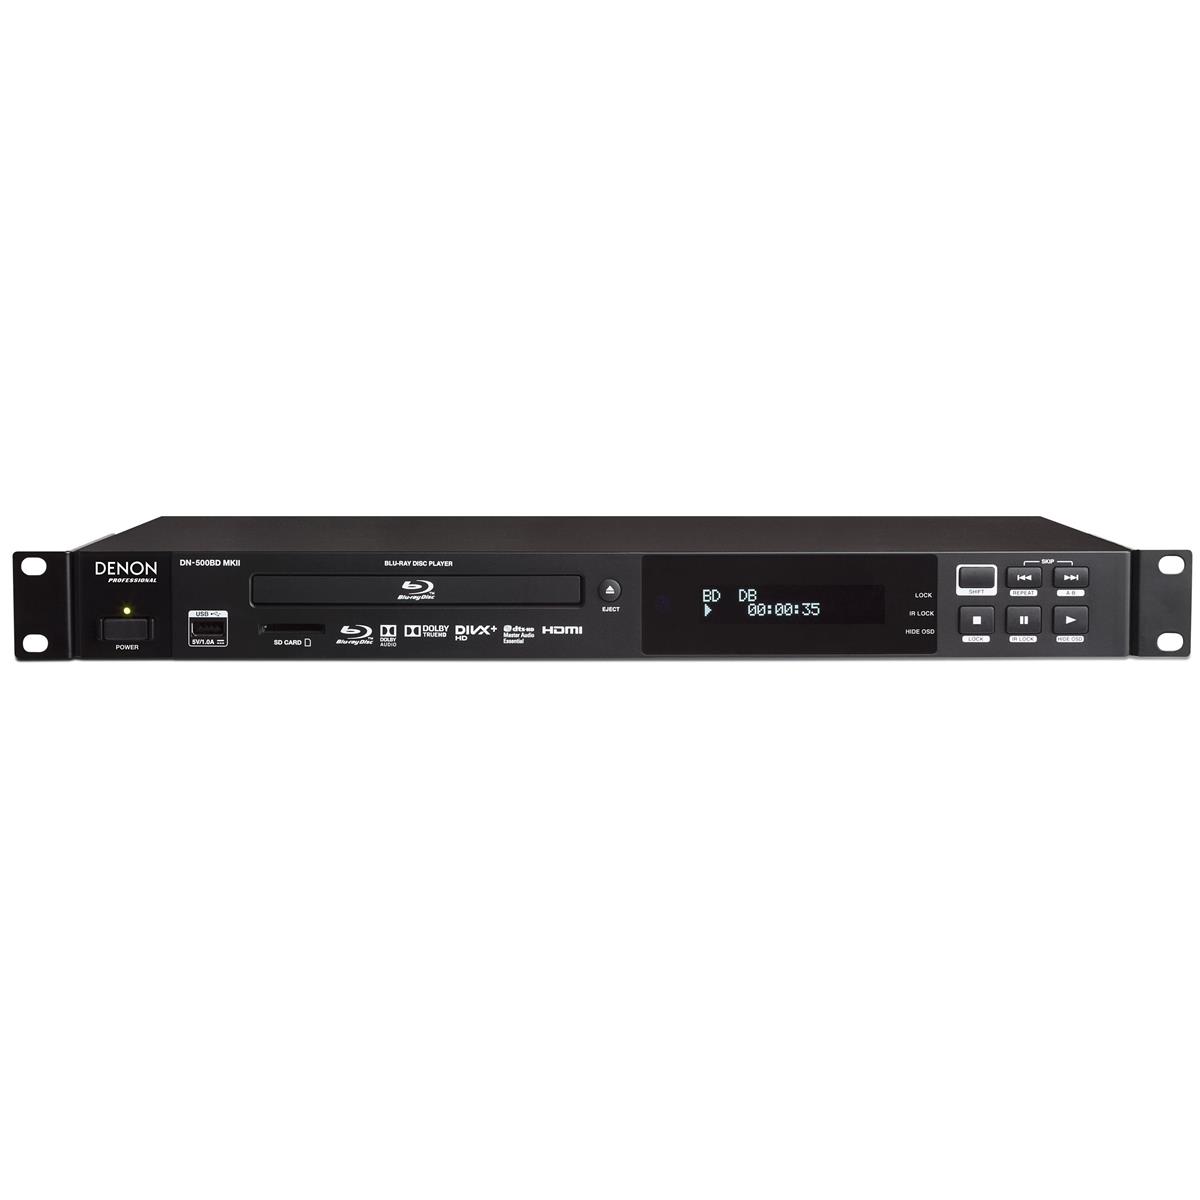 

Denon Pro Denon DN-500BD MKII Professional 1RU Blu-Ray, DVD and CD/SD/USB Player